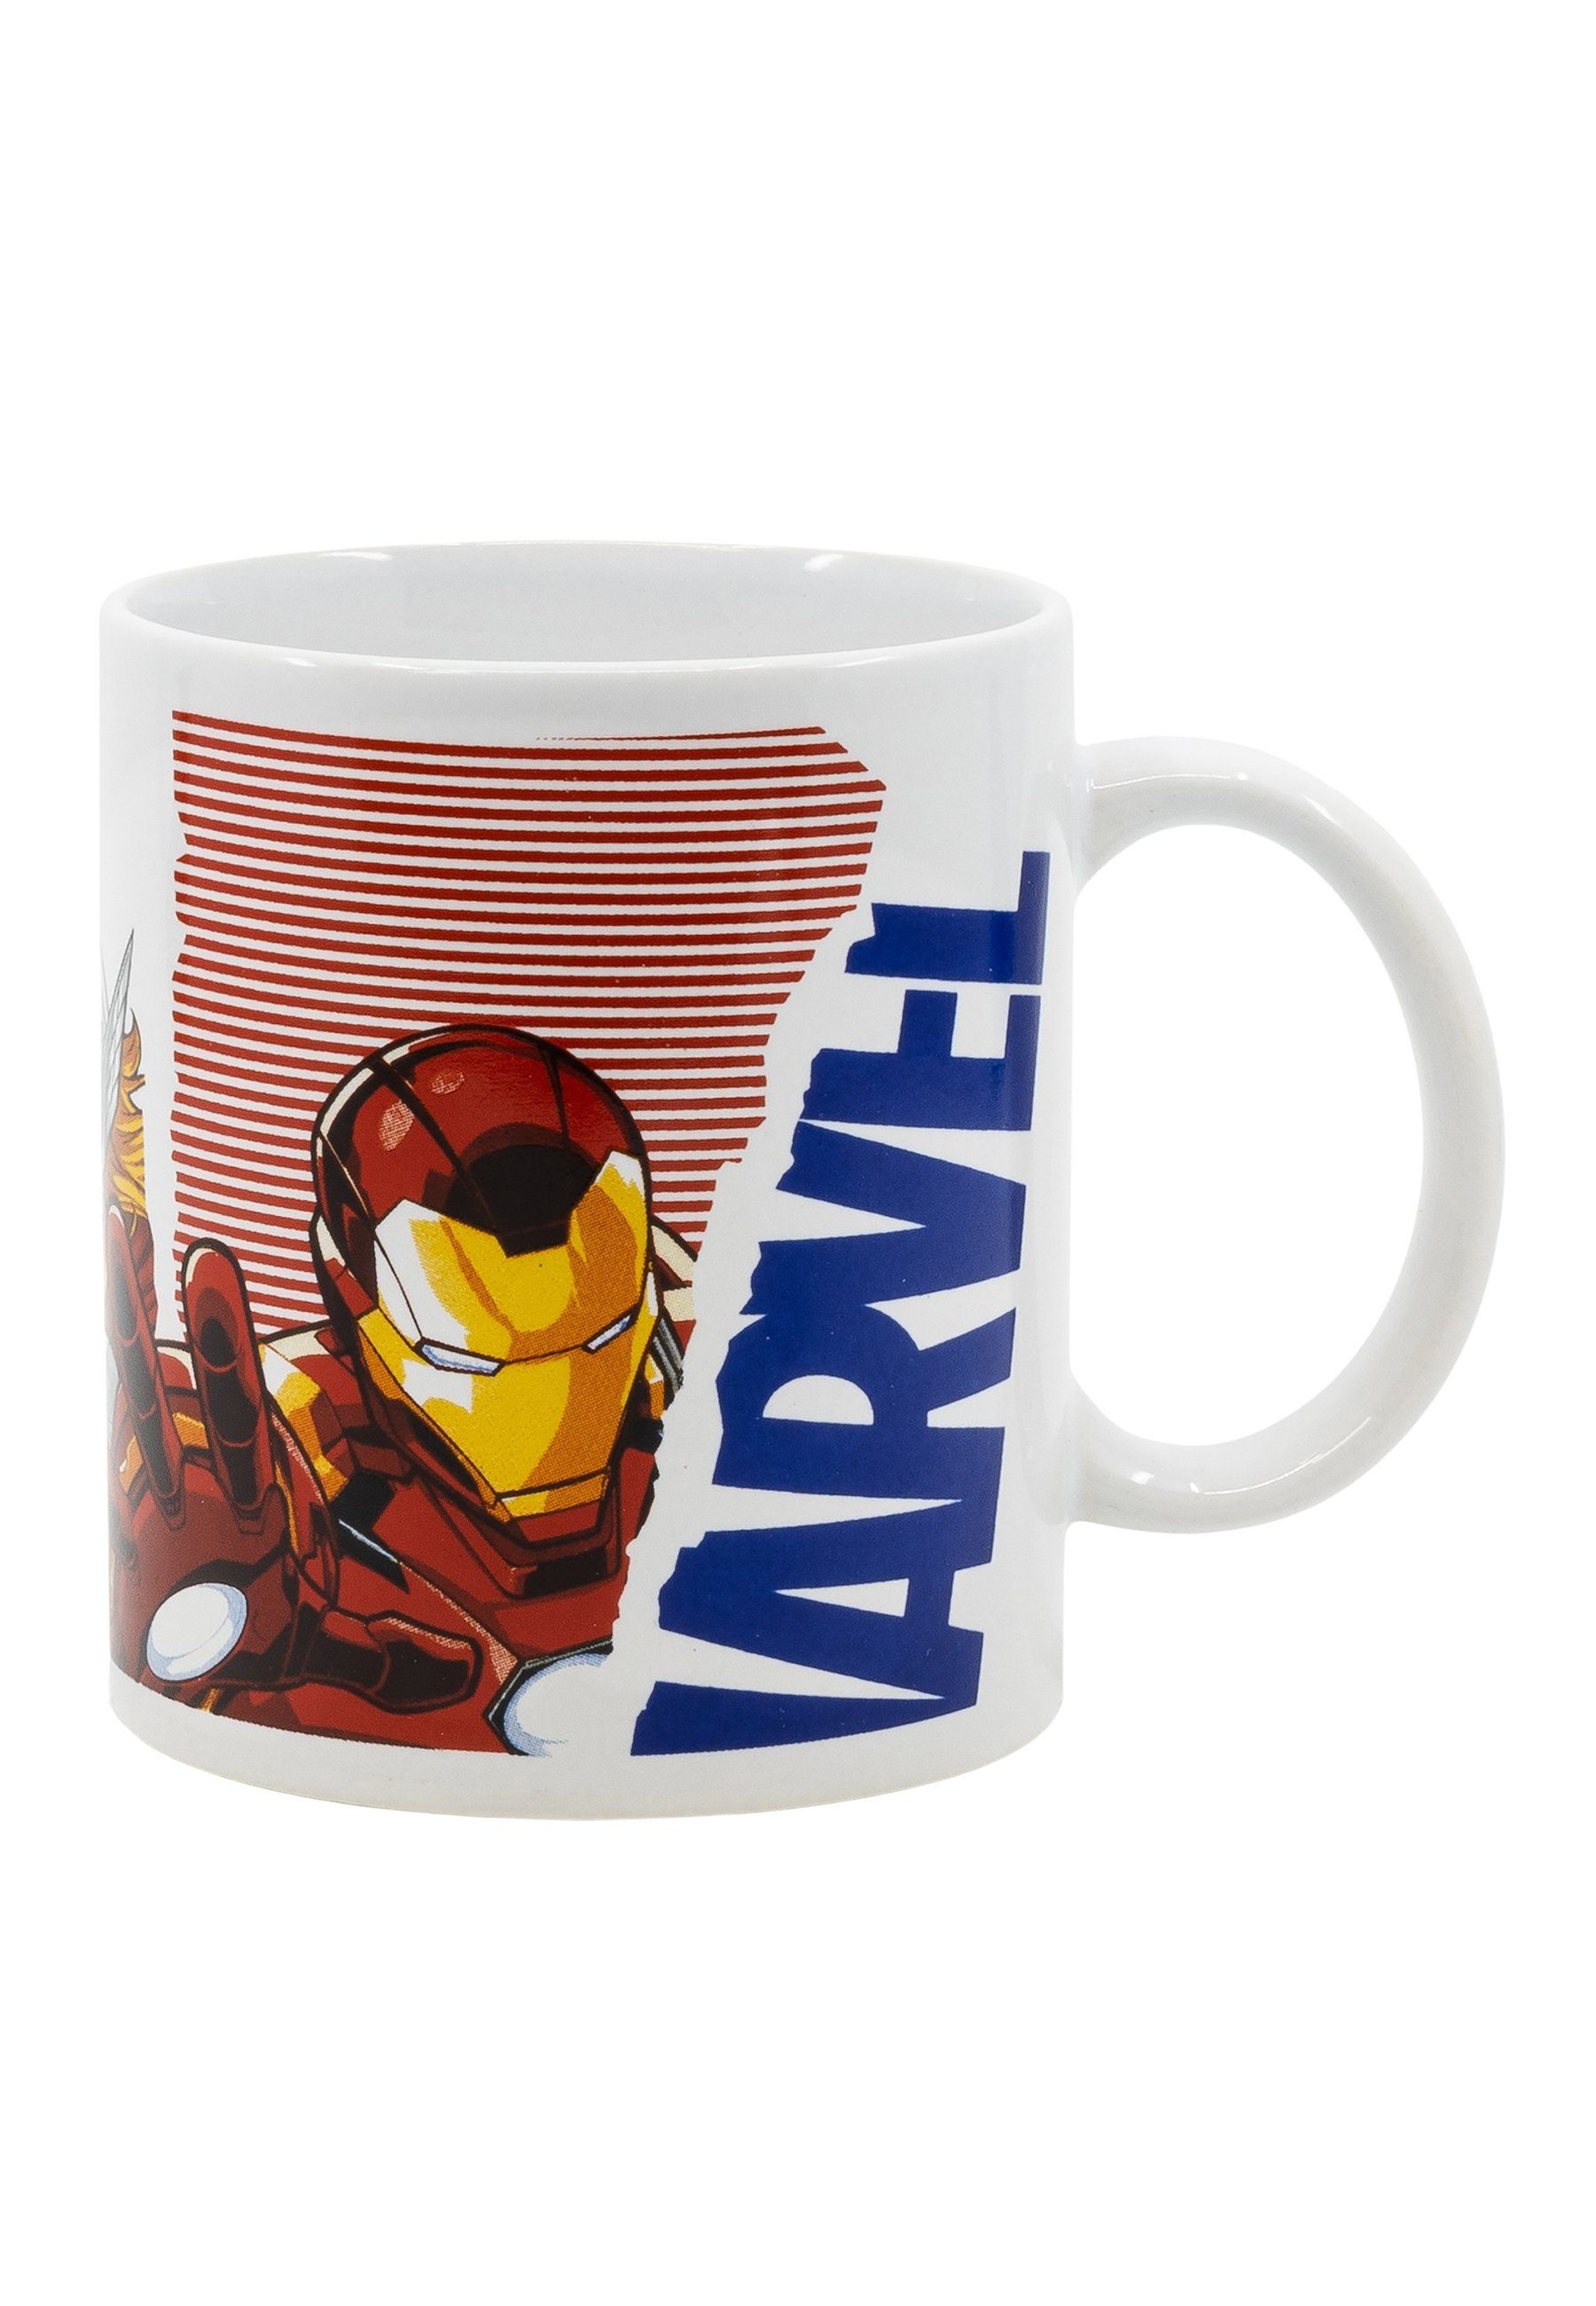 The AVENGERS Tasse Kinder-Becher Jungen Tasse Captain America Iron Man, aus  Porzellan im Geschenkkarton